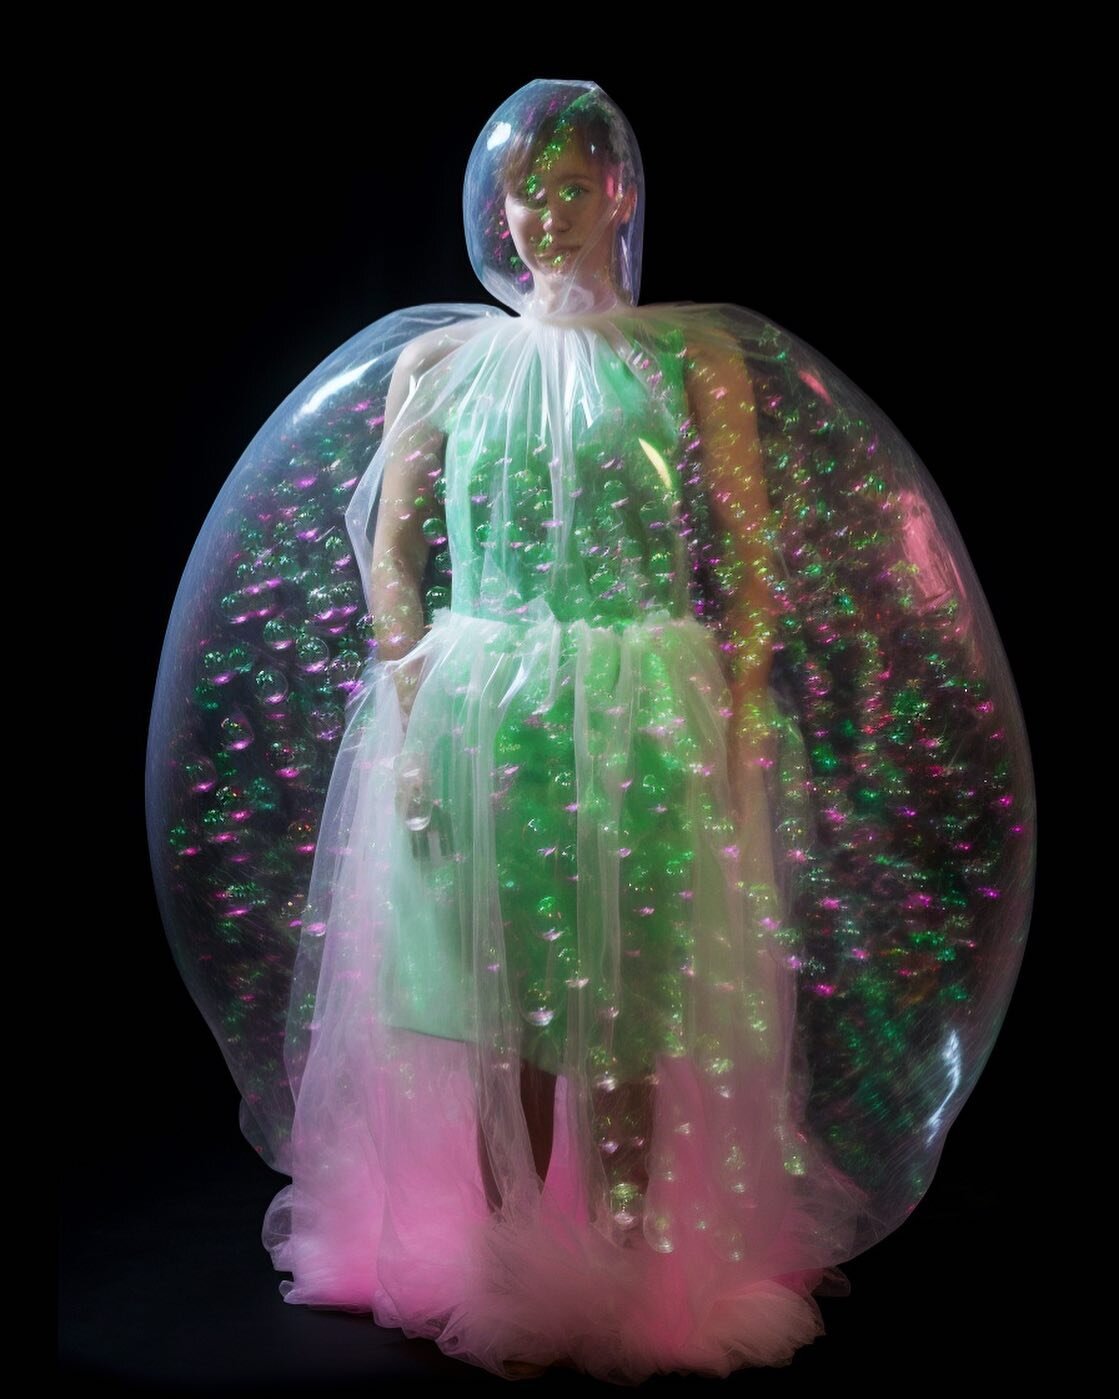 Bubble Wrap #ai #midjourney #aiart #synthography #midjourneyart #art #digitalart #synthography #midjourneycrew #midjourneyv5 #generativeart #pink #girl #bubble #bubbles #bubblewrap #portrait #weirdart #dress